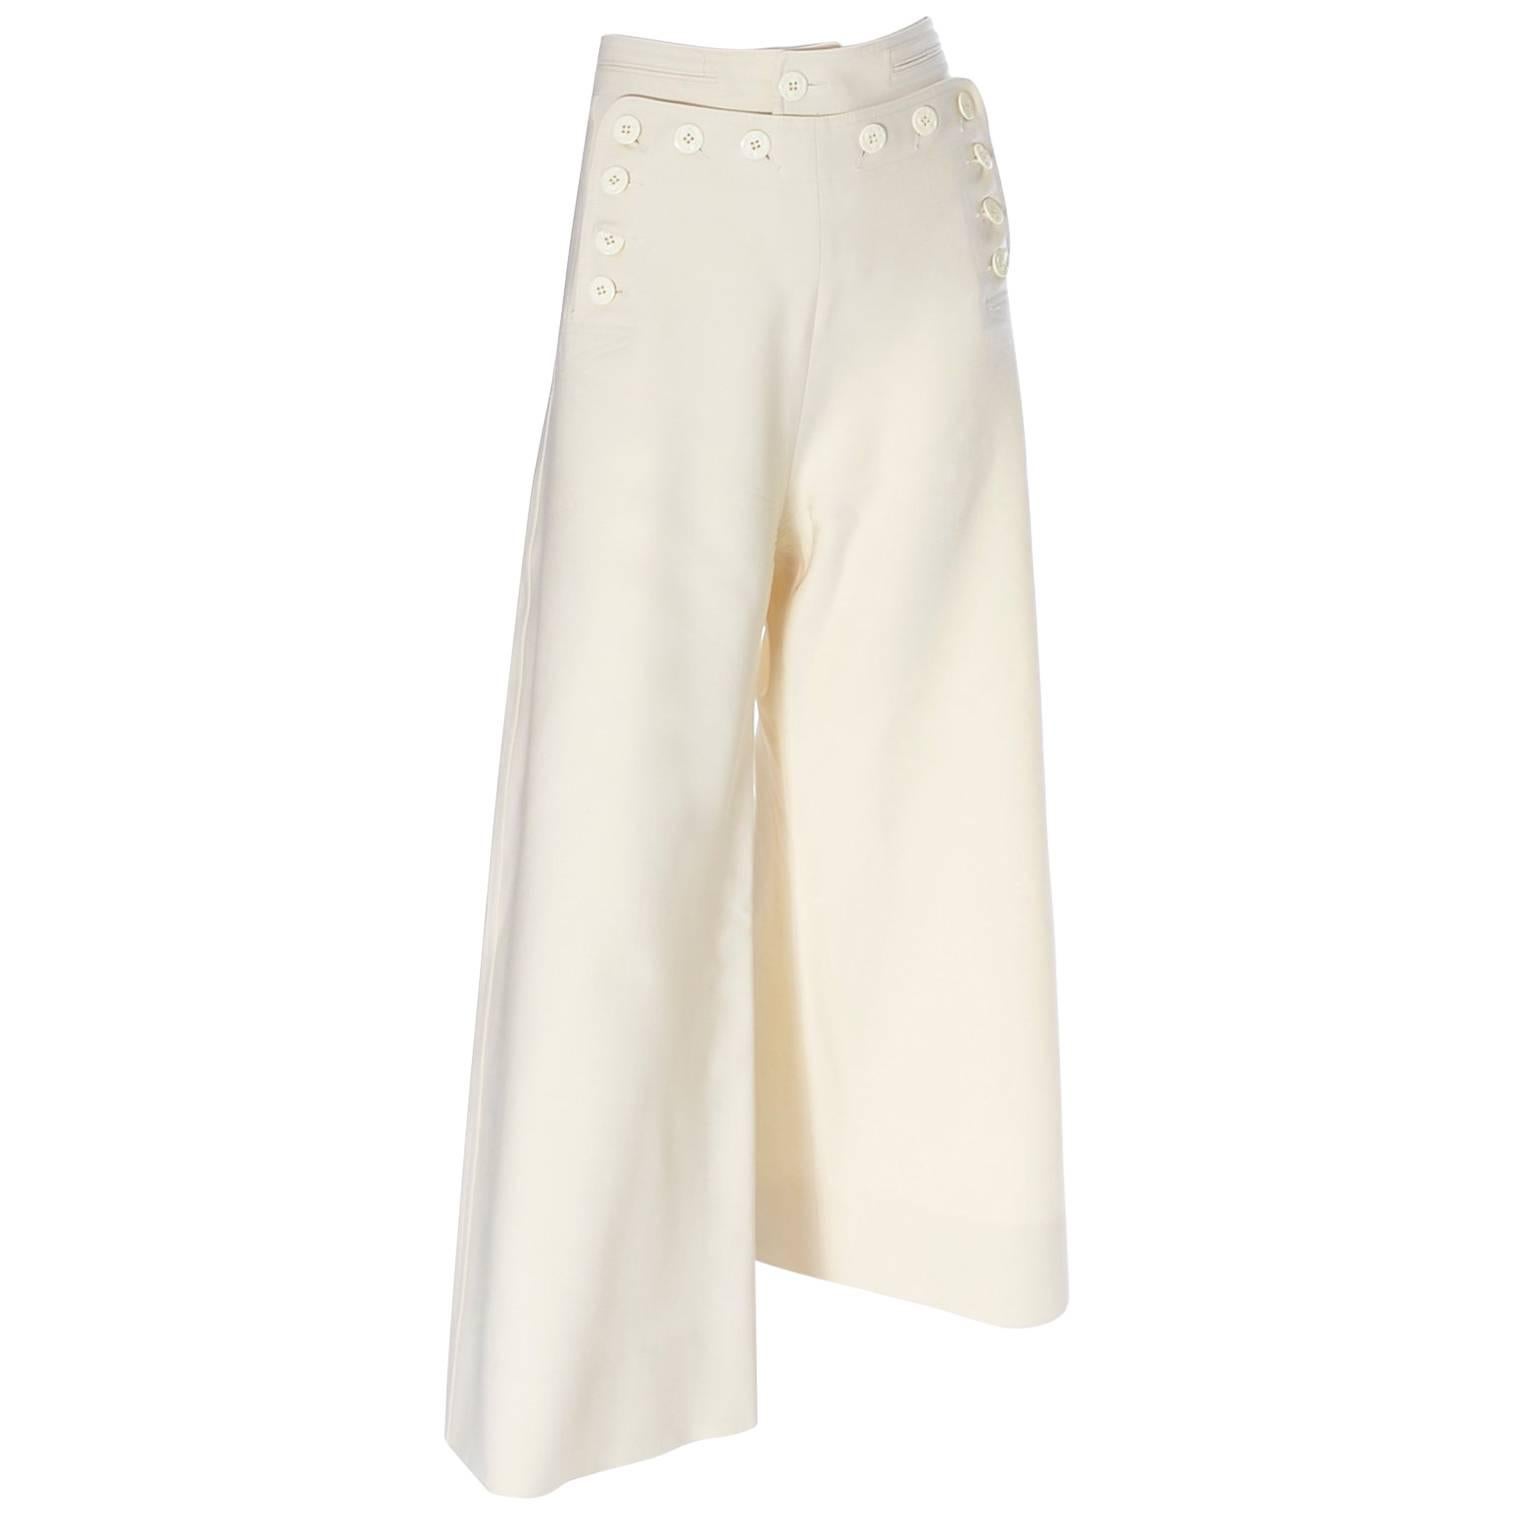 Sailor Pants Vintage - 5 For Sale on 1stDibs